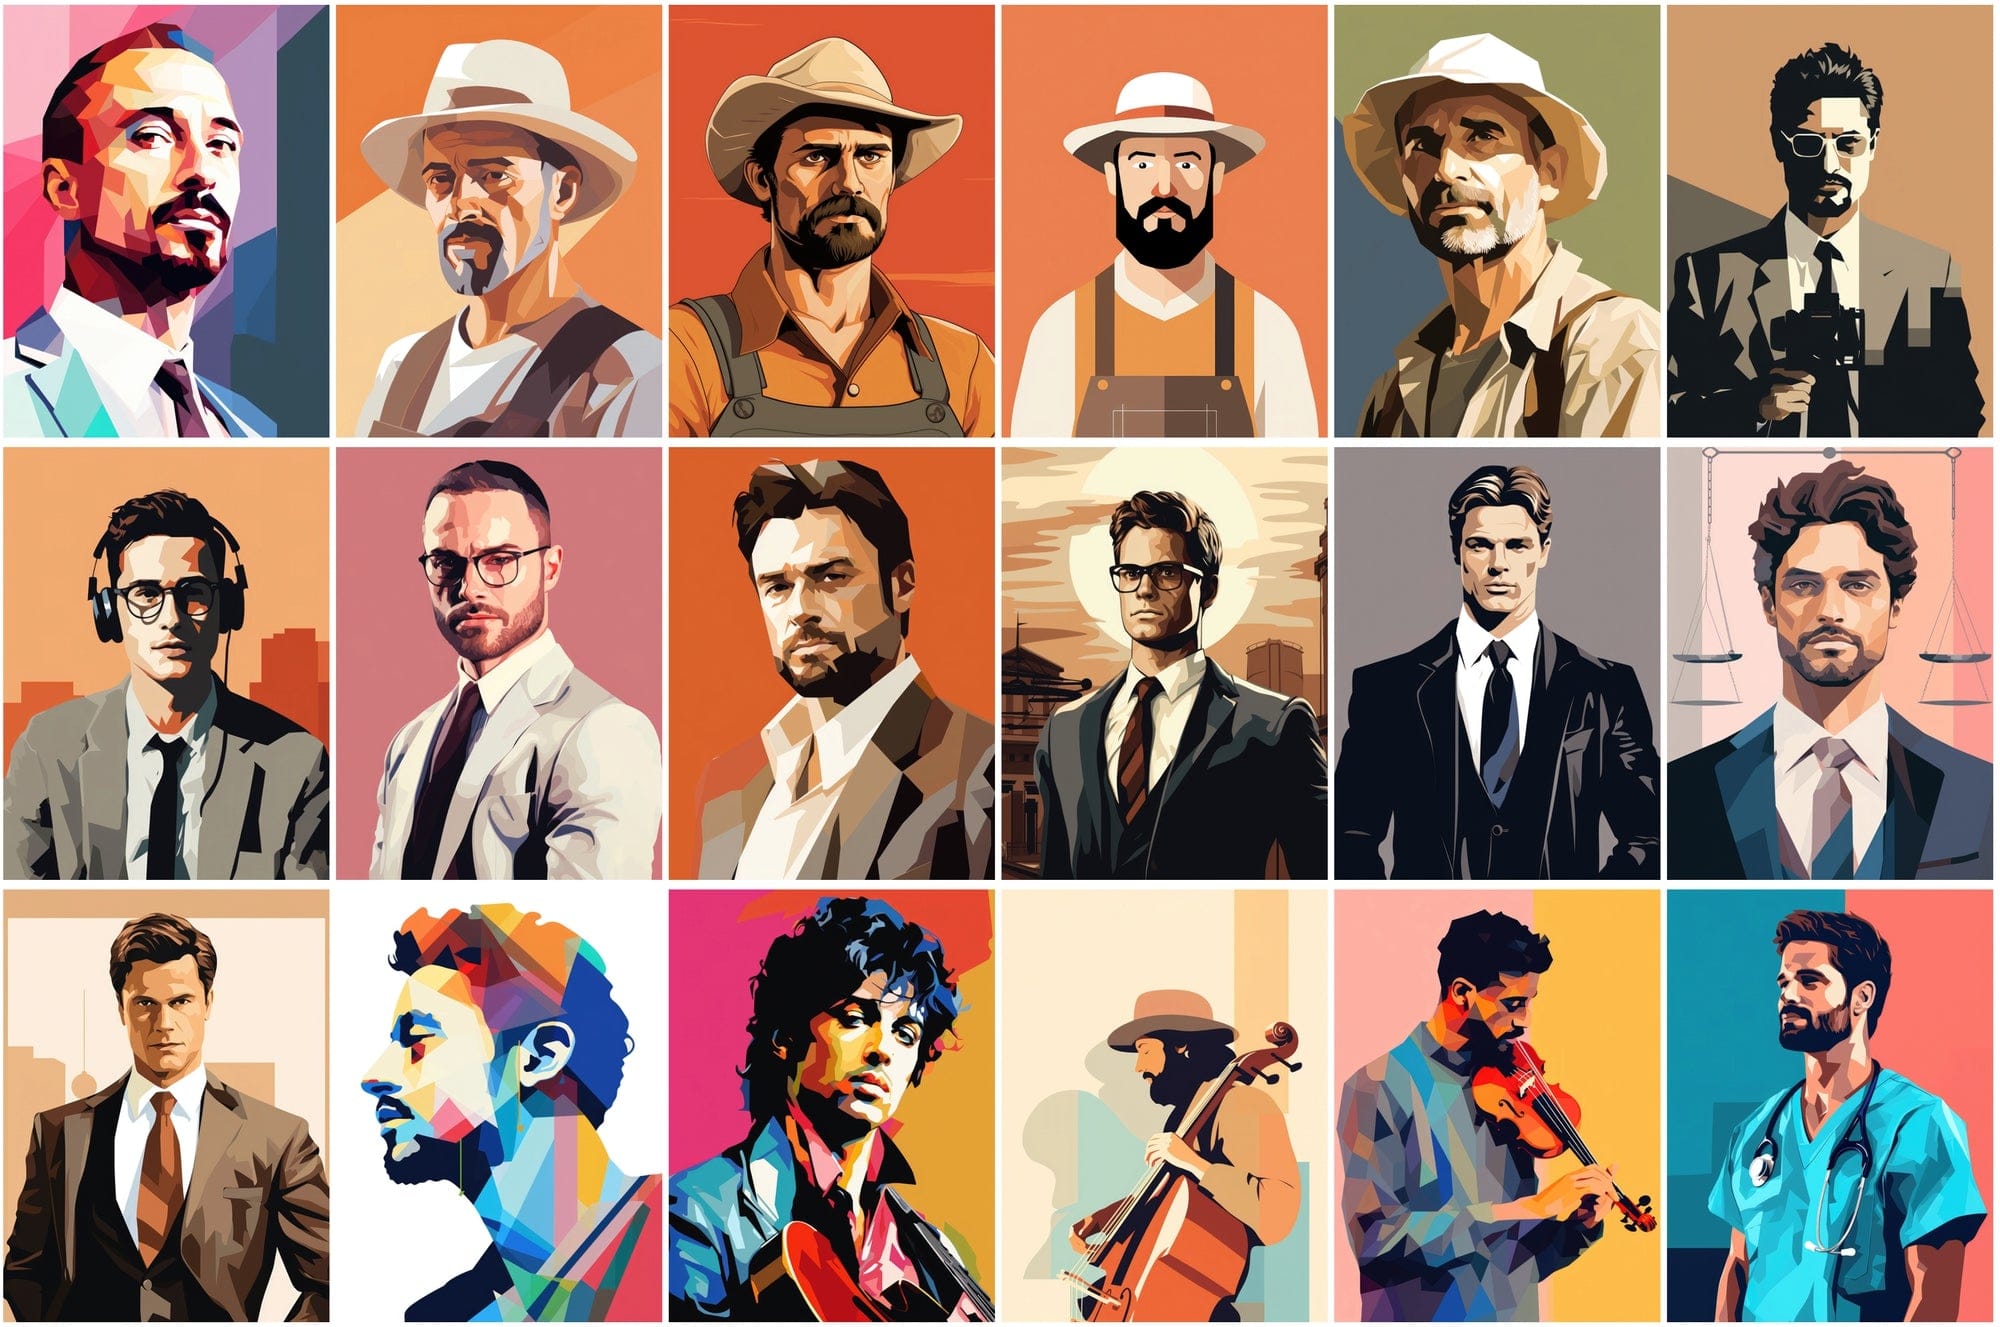 Premium Men's Profession PNGs - 110 High-Quality Colorful Images of Different Jobs Digital Download Sumobundle